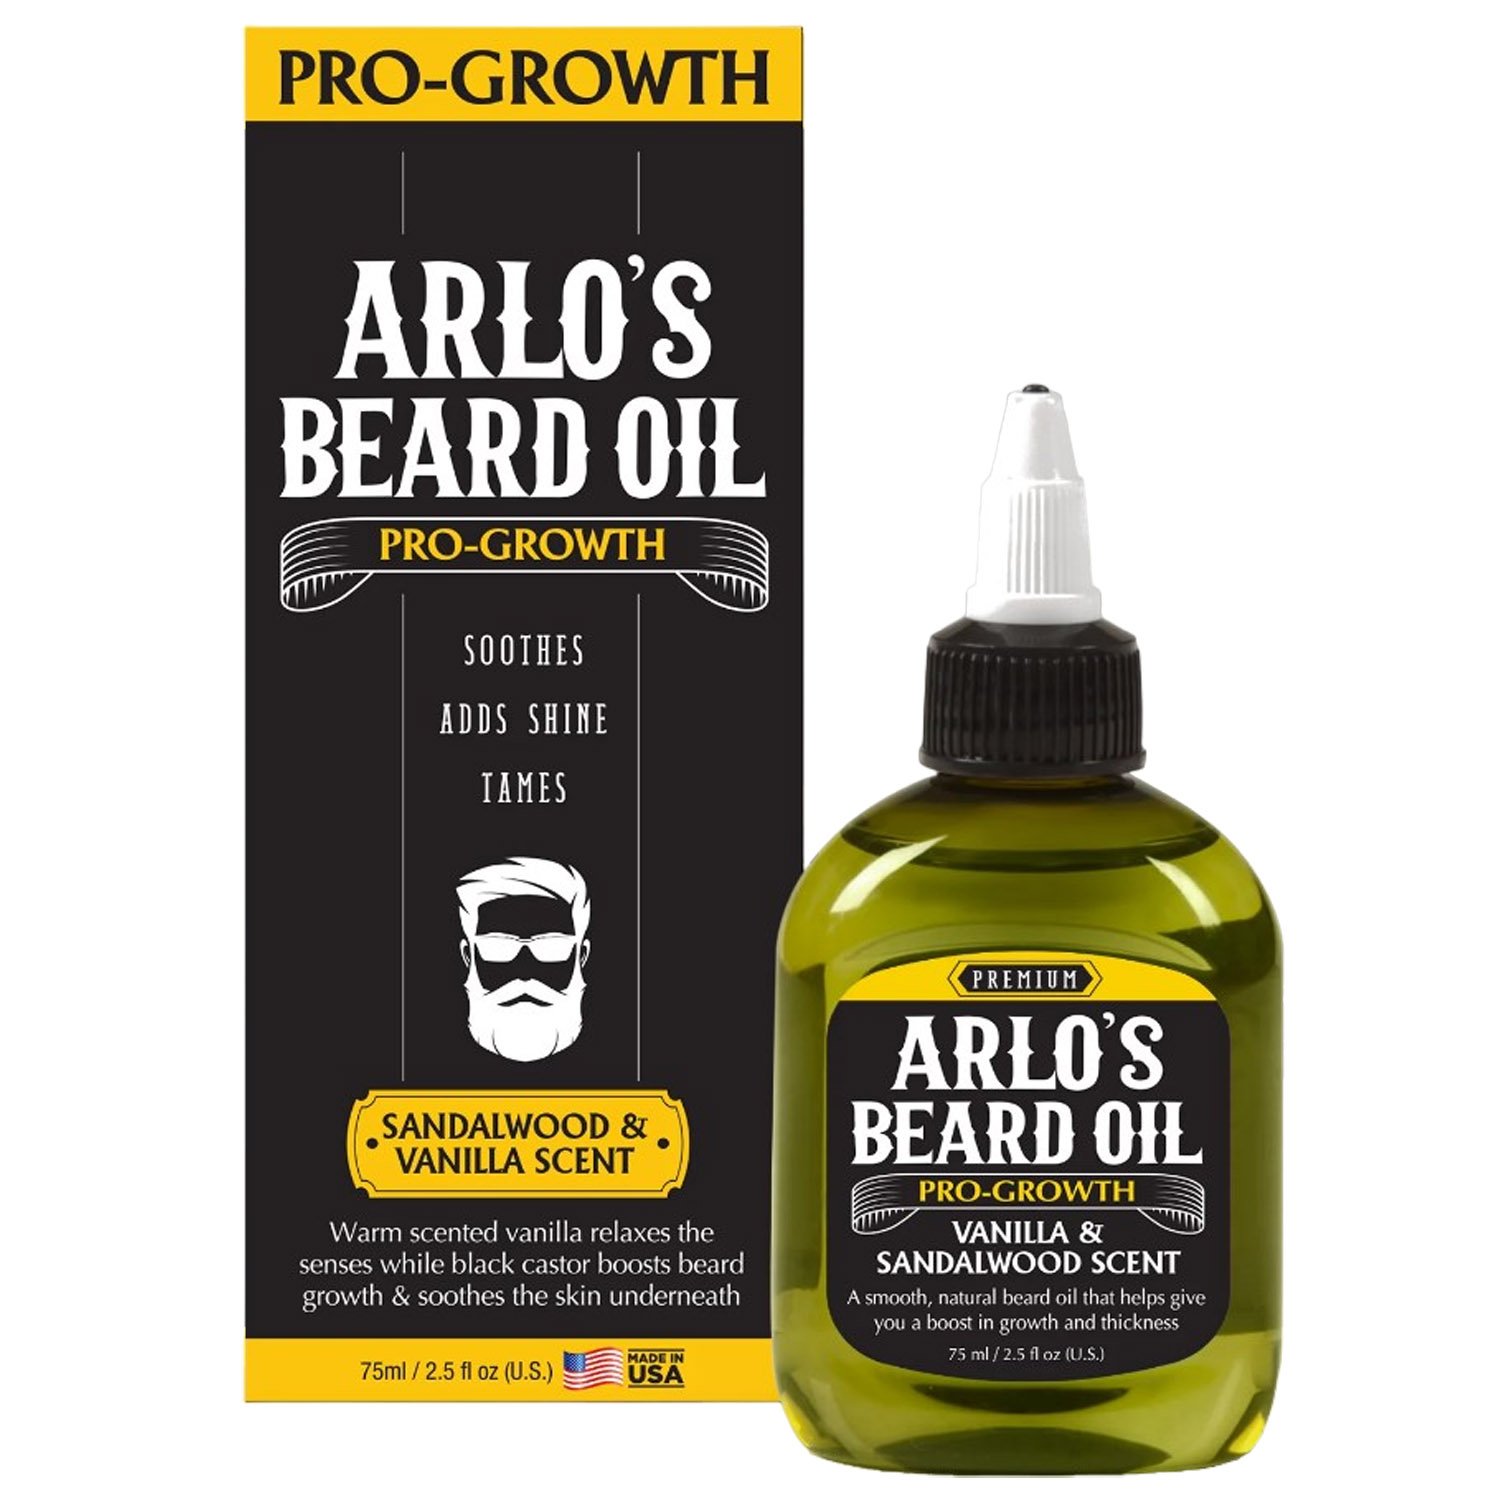 Олія для бороди Arlo's Pro-Growth Beard Oil Vanilla & Sandalwood Scent, 75 мл - фото 1